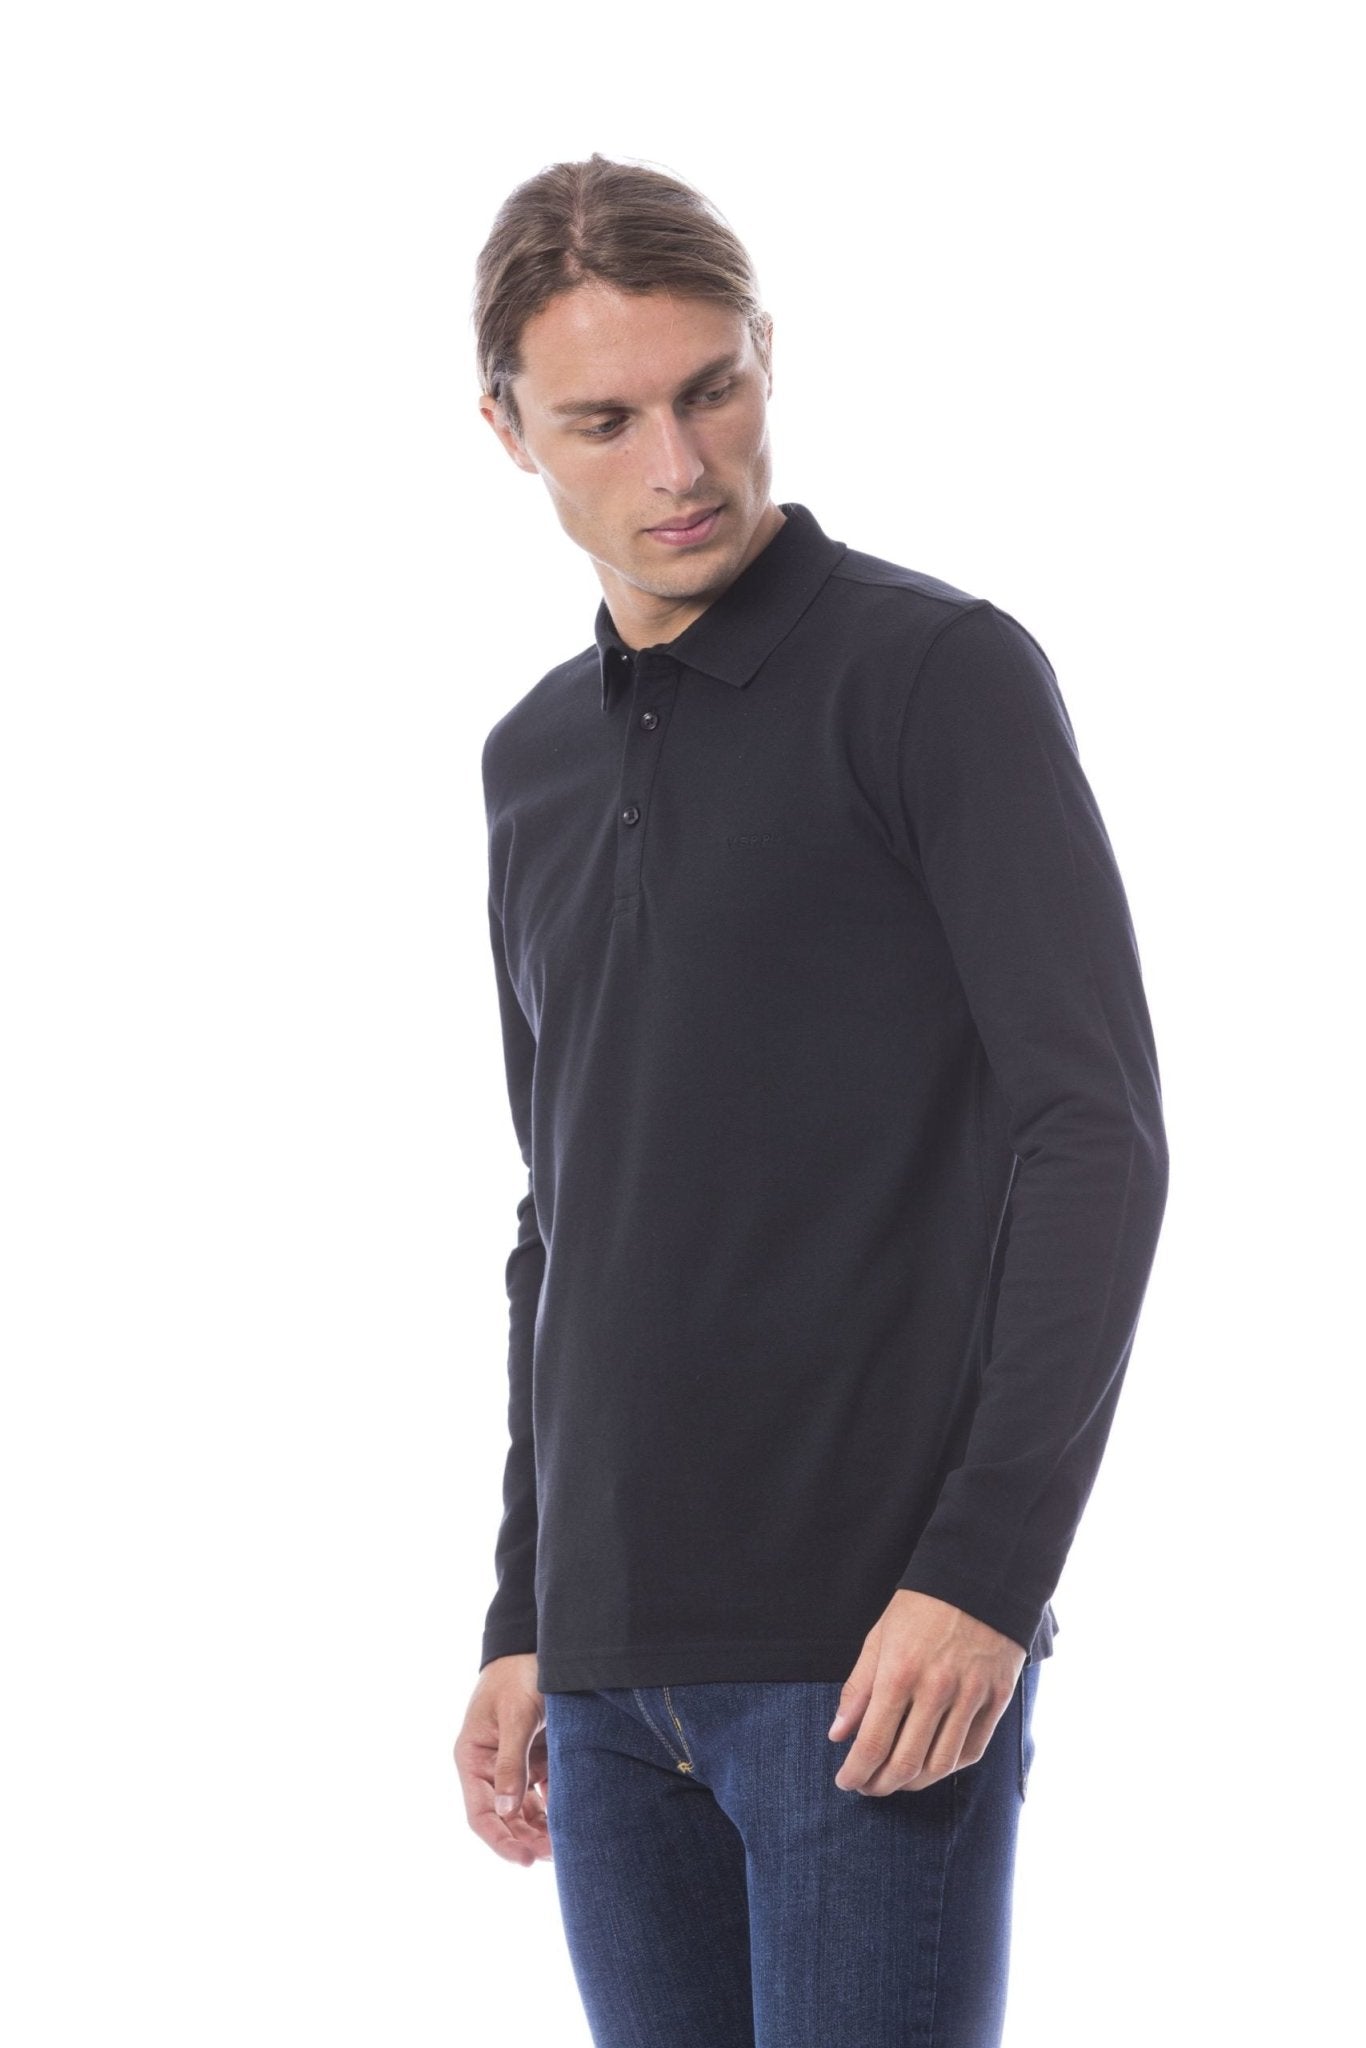 Verri Black Cotton T-Shirt - Fizigo